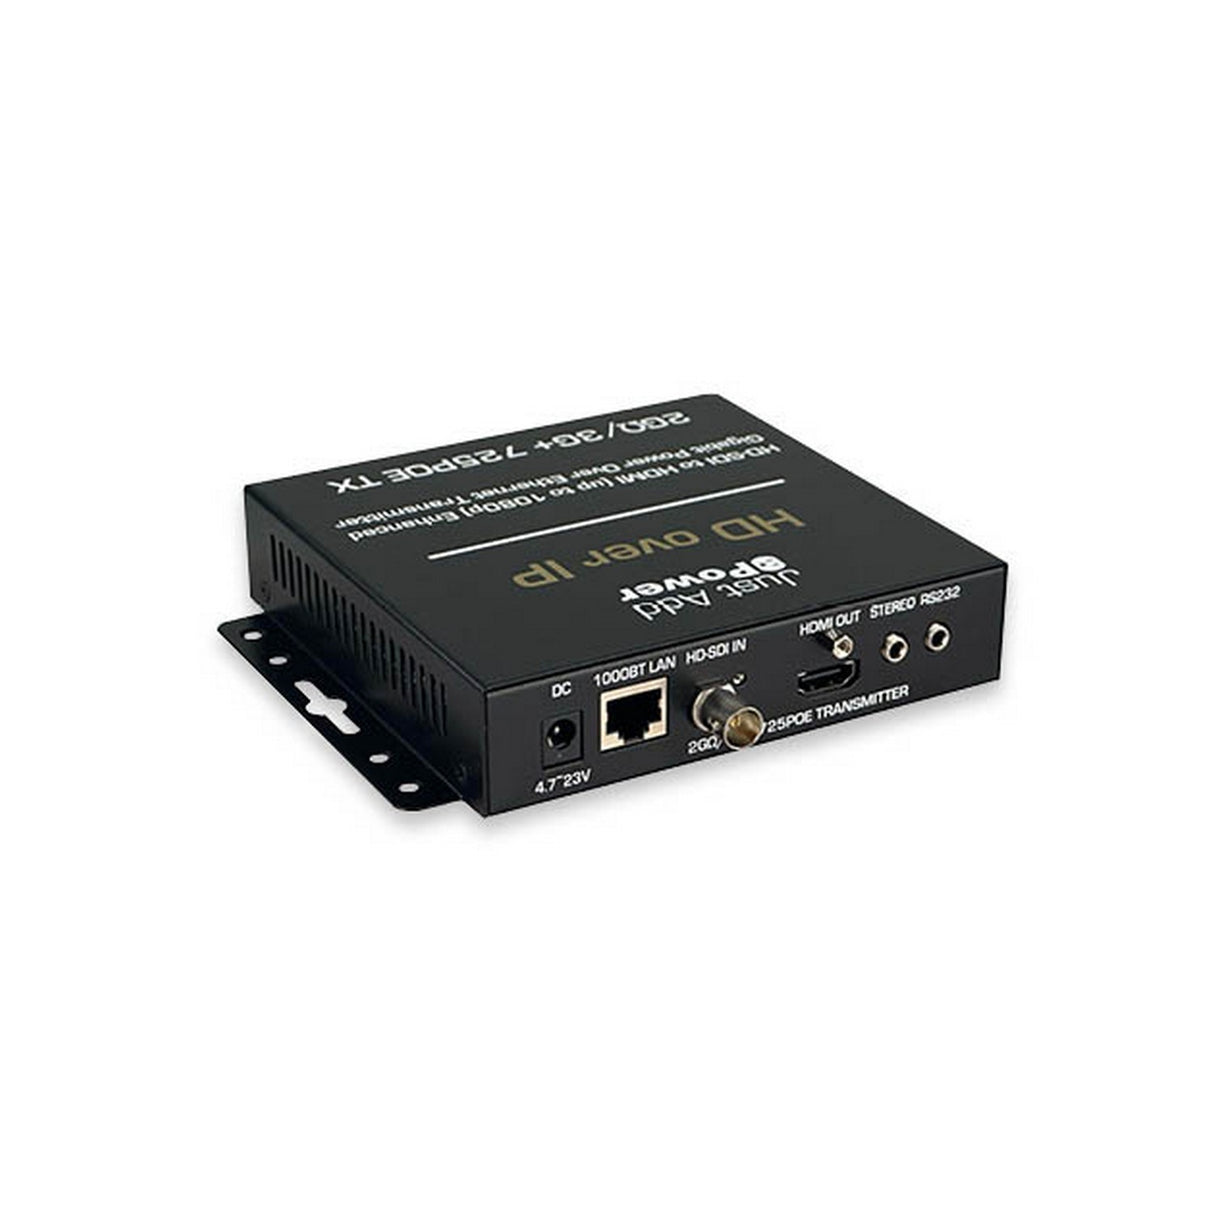 Just Add Power 2G/3G+ OMEGA 725POE HD over IP Enhanced Gigabit Transmitter, HD-SDI/HDMI